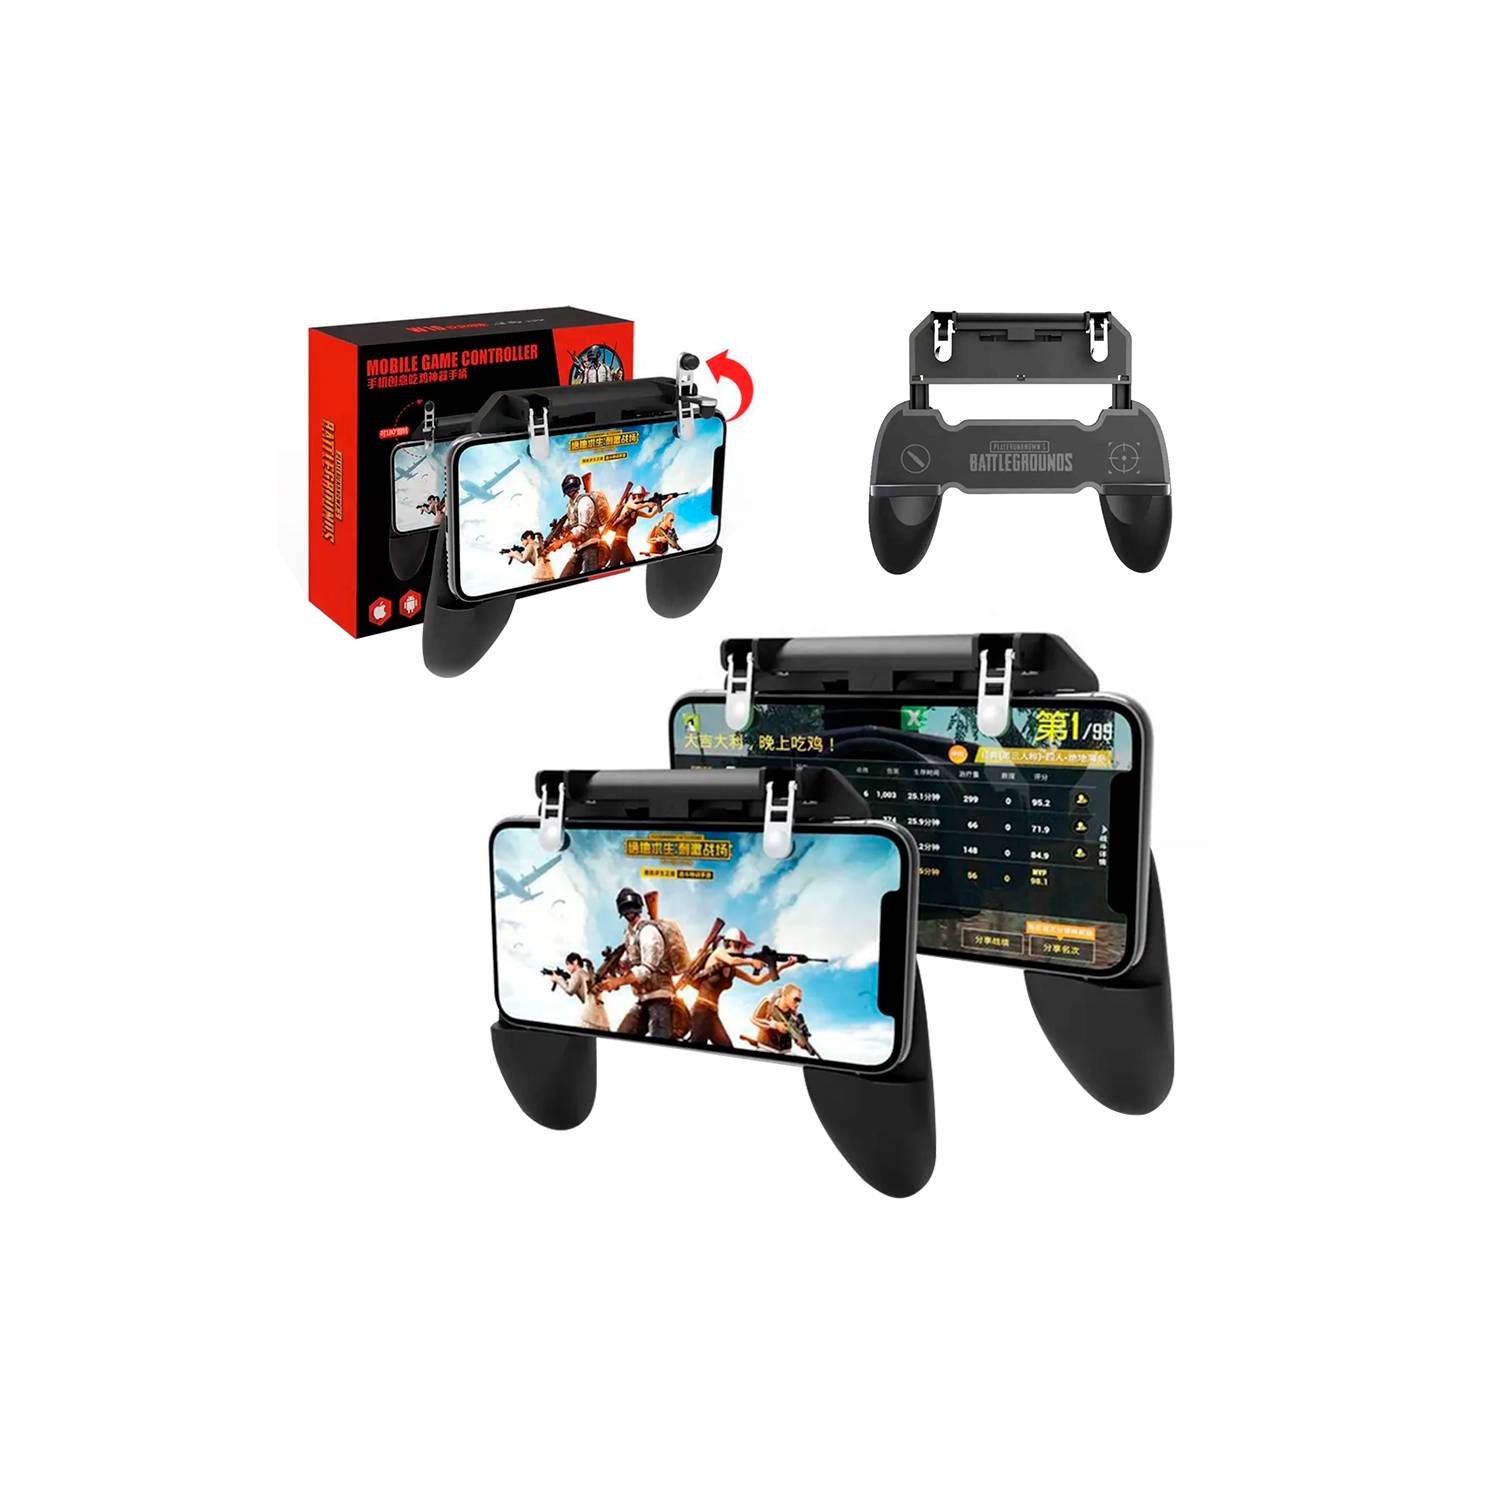 si cristiano conectar Mando Gamepad para Juegos Joystick Android o Iphone OEM | falabella.com